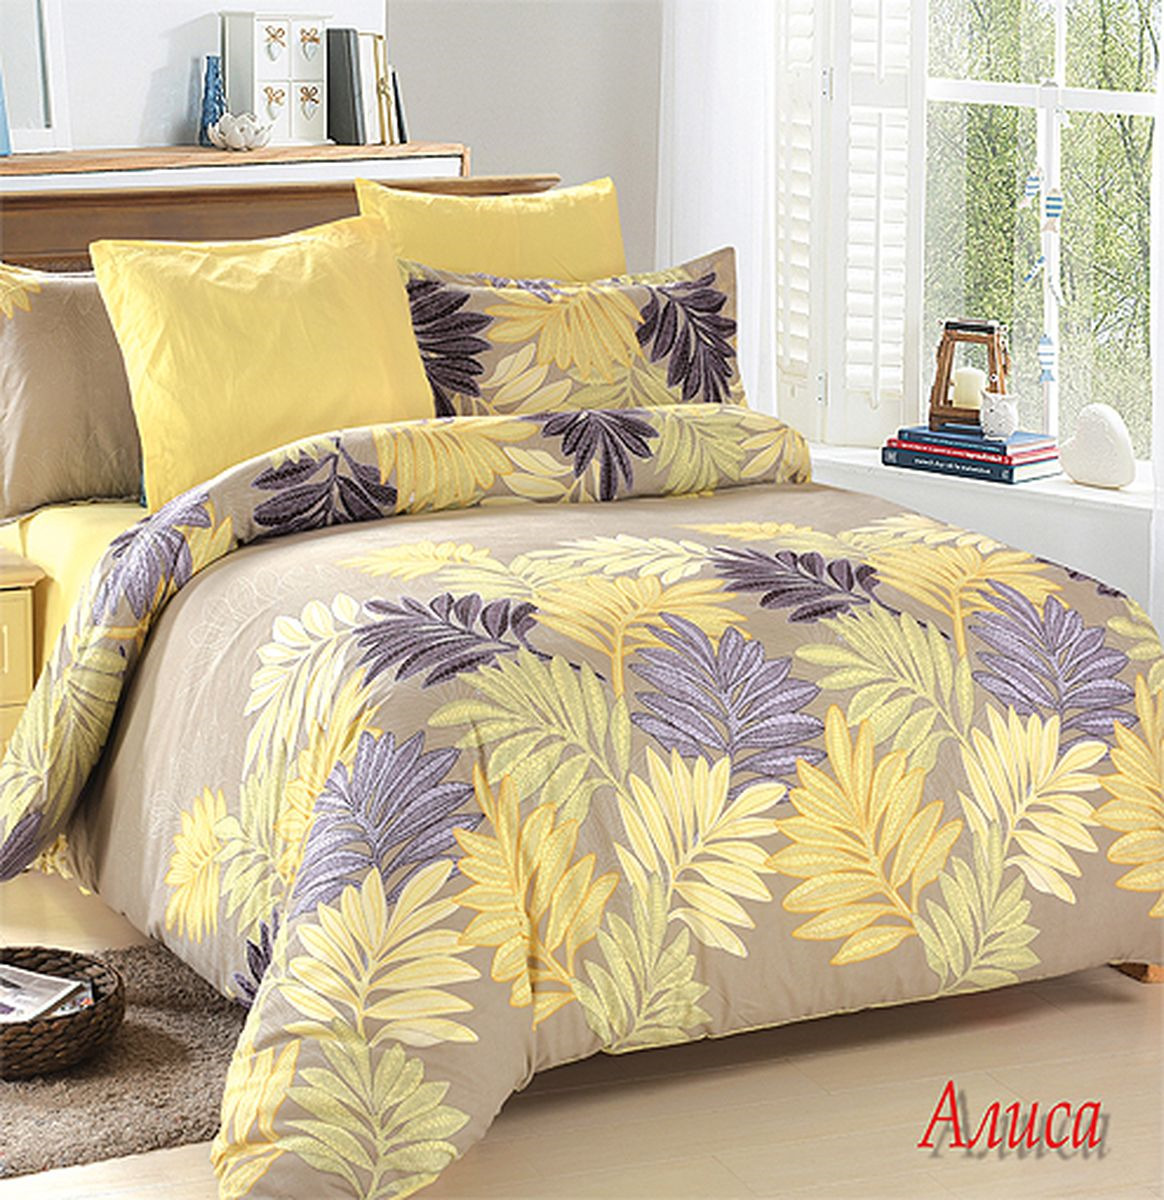 Комплект белья Amore Mio Alice Combo, 2-спальный, 4707, желтый, наволочки 70 х 70 см